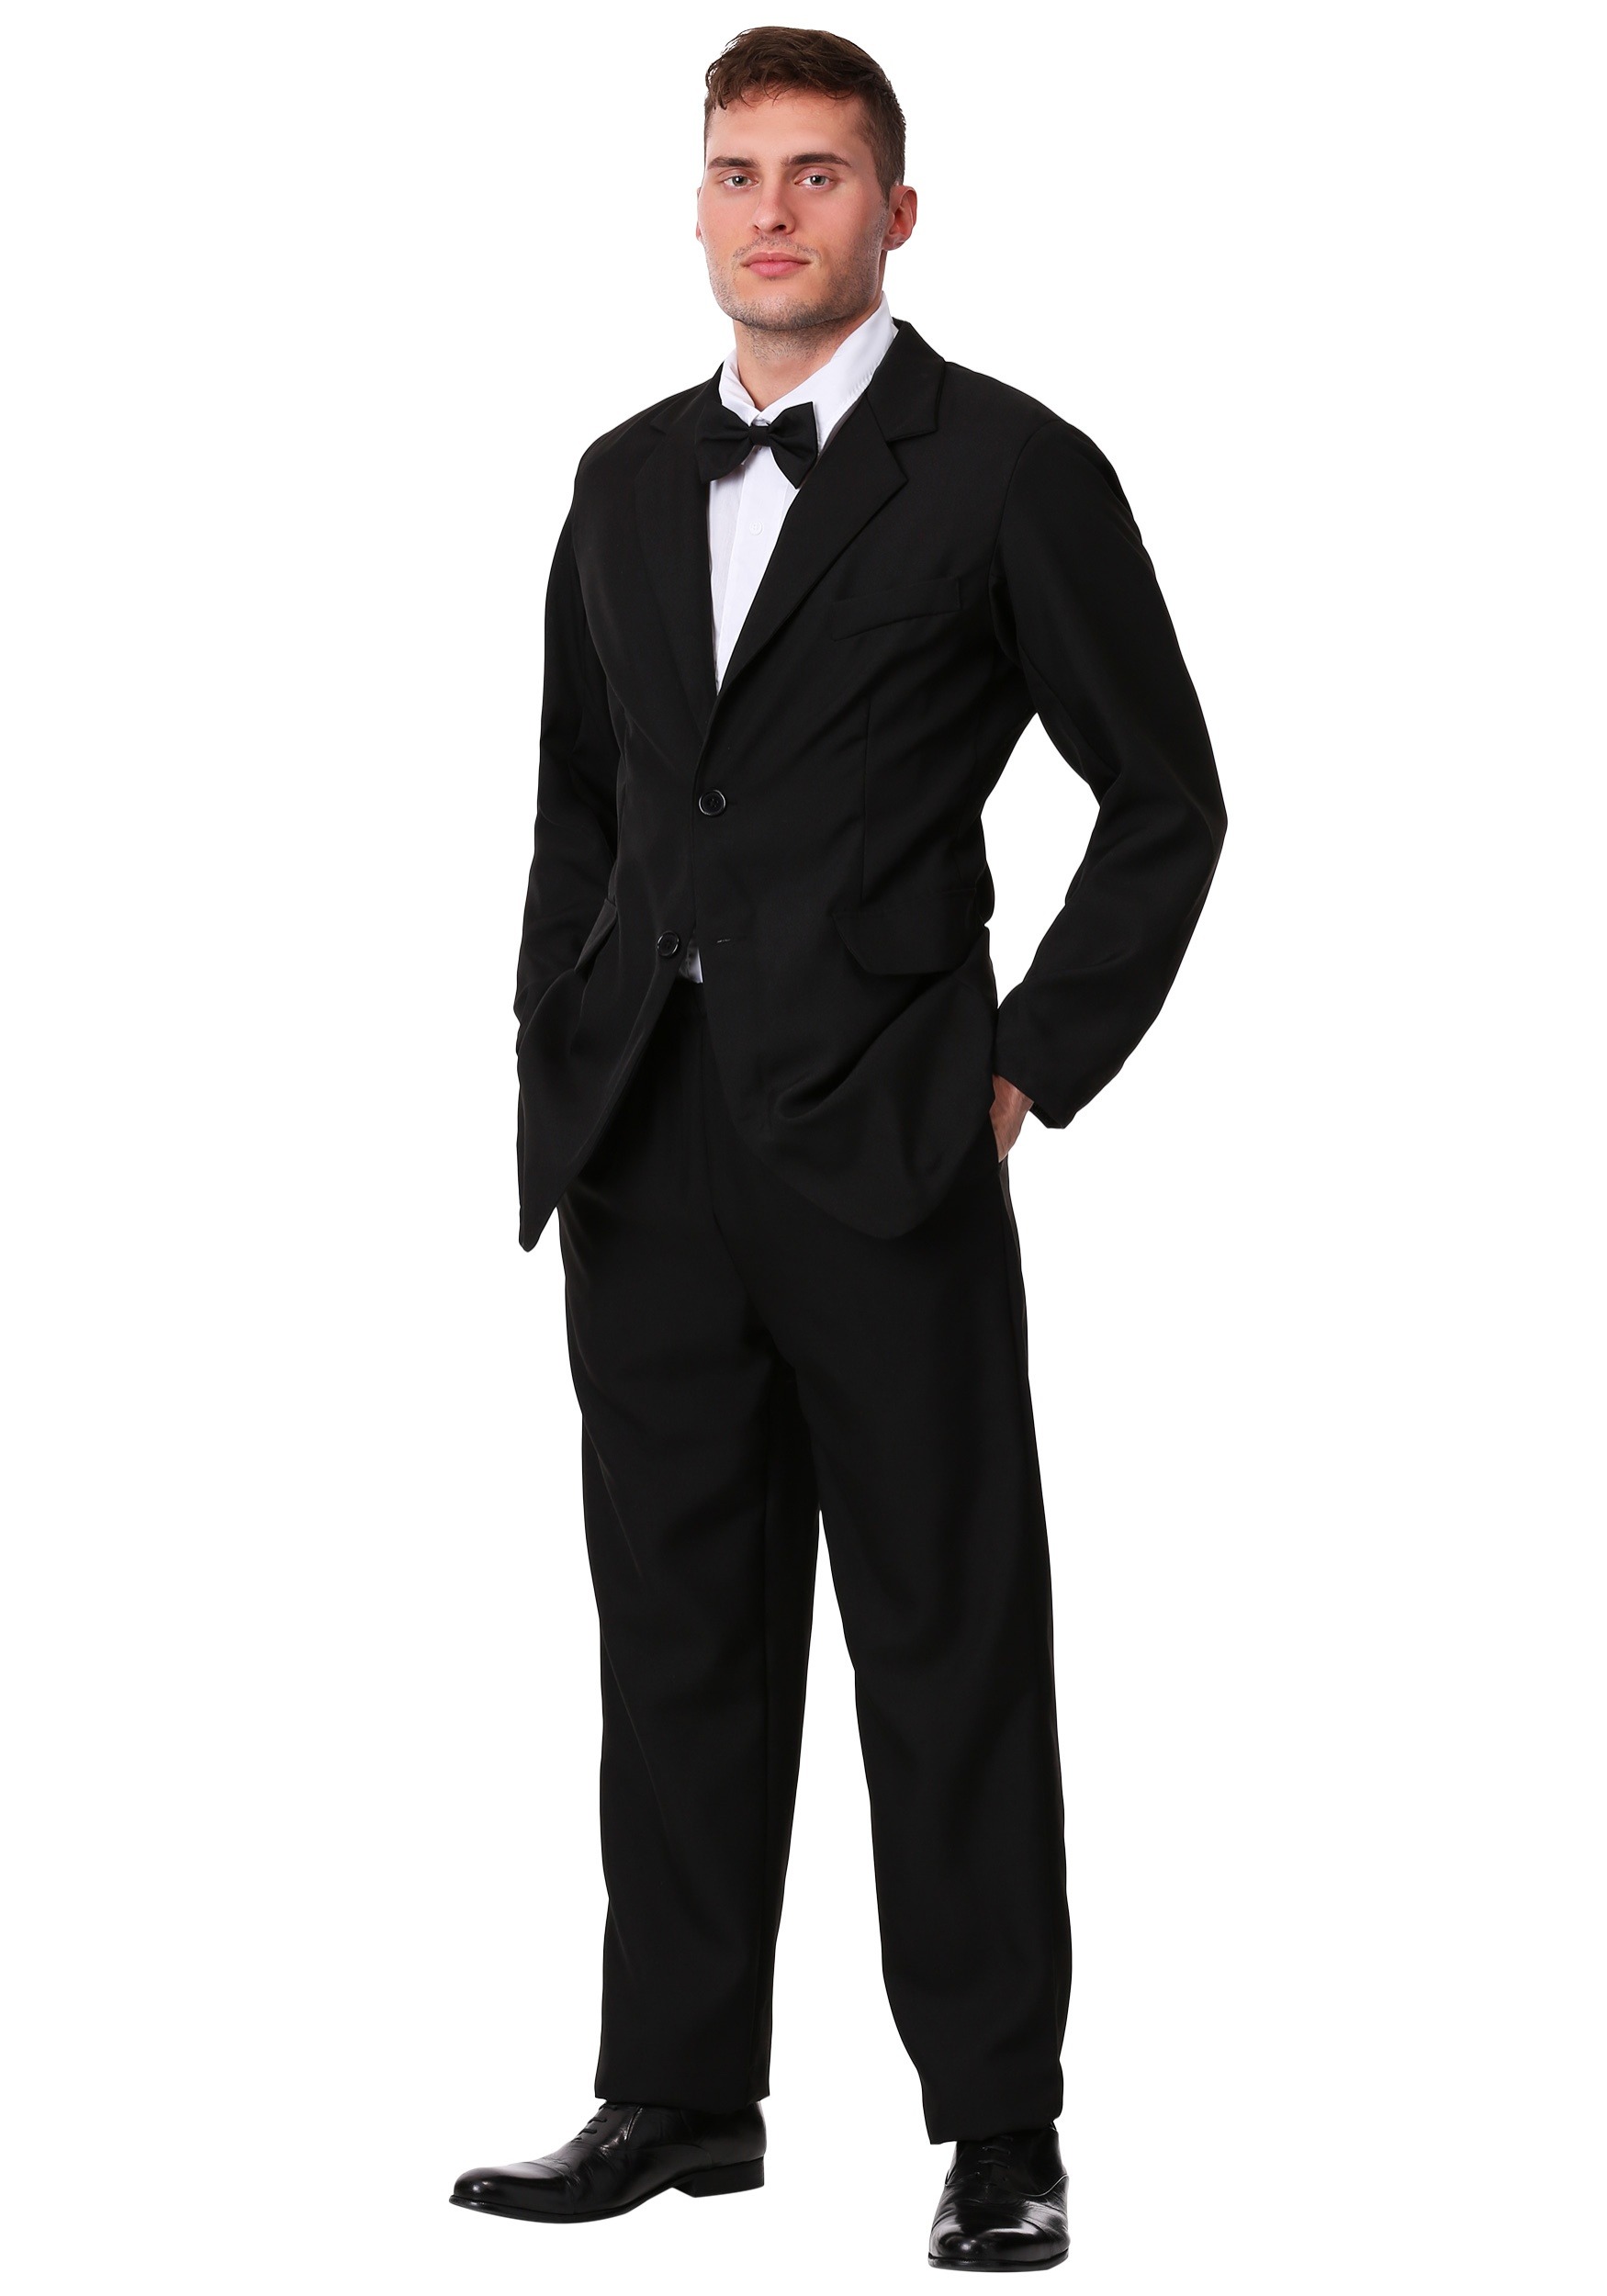 Photos - Fancy Dress FUN Costumes Mens Black Suit Costume